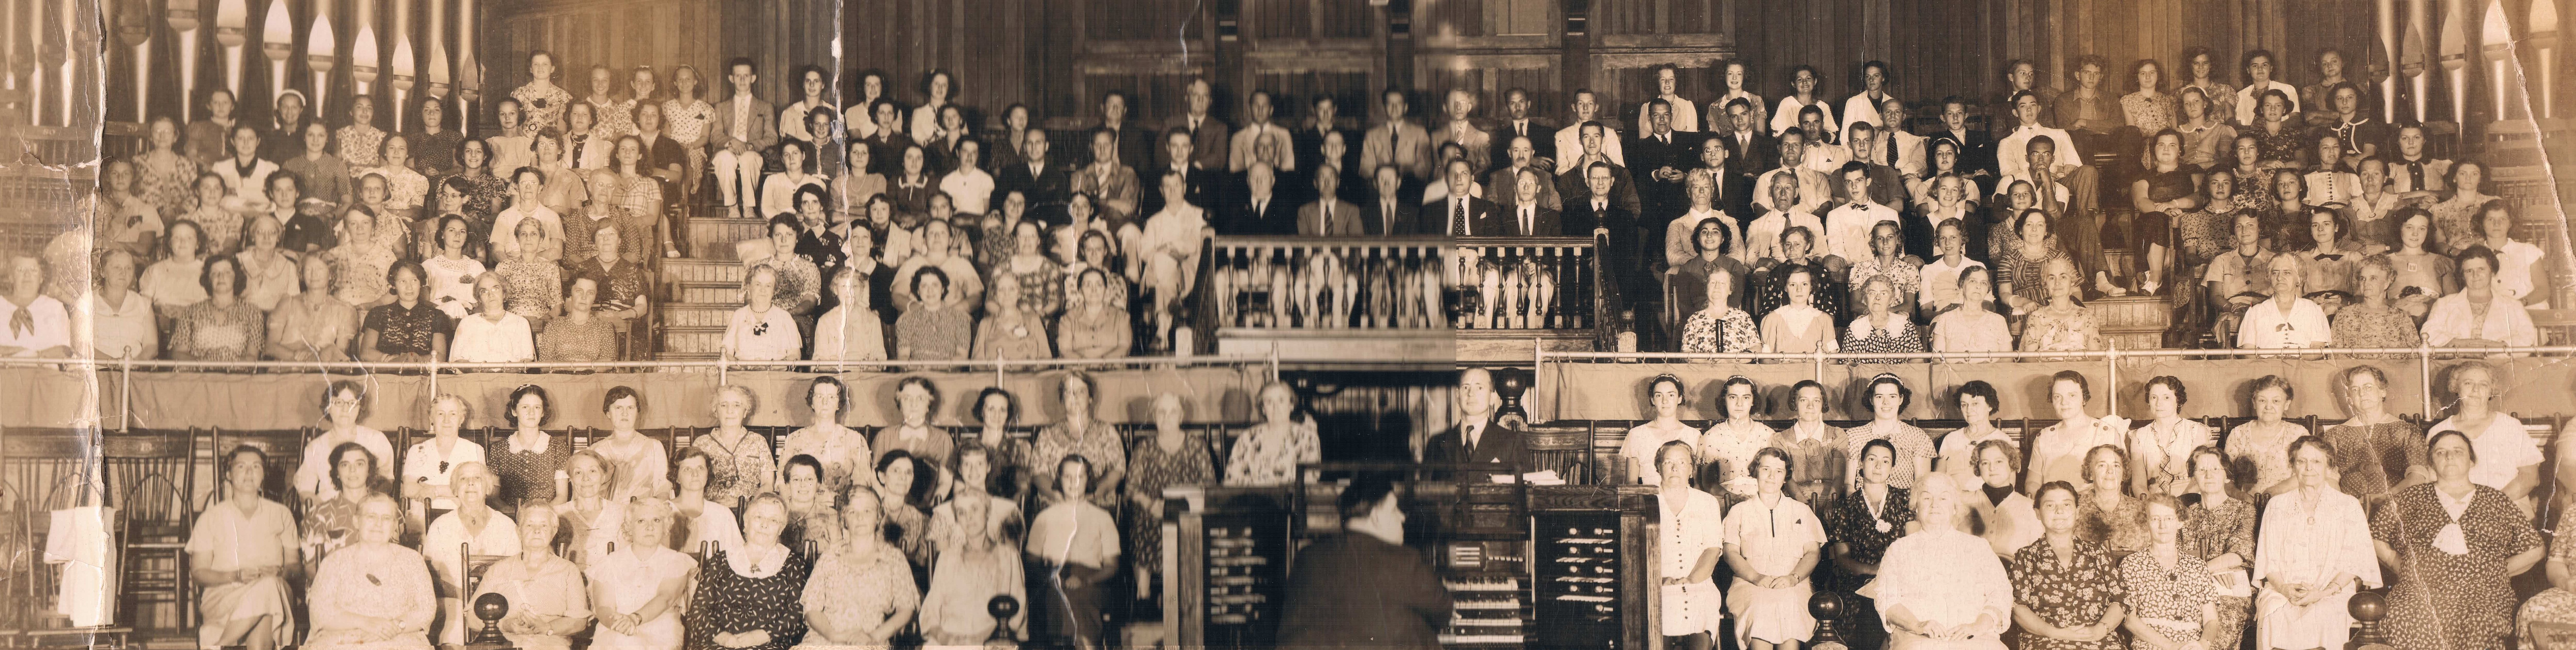 1937 Choir Photo - Director: Walter Eddows, Clarence Kohlman at the organ